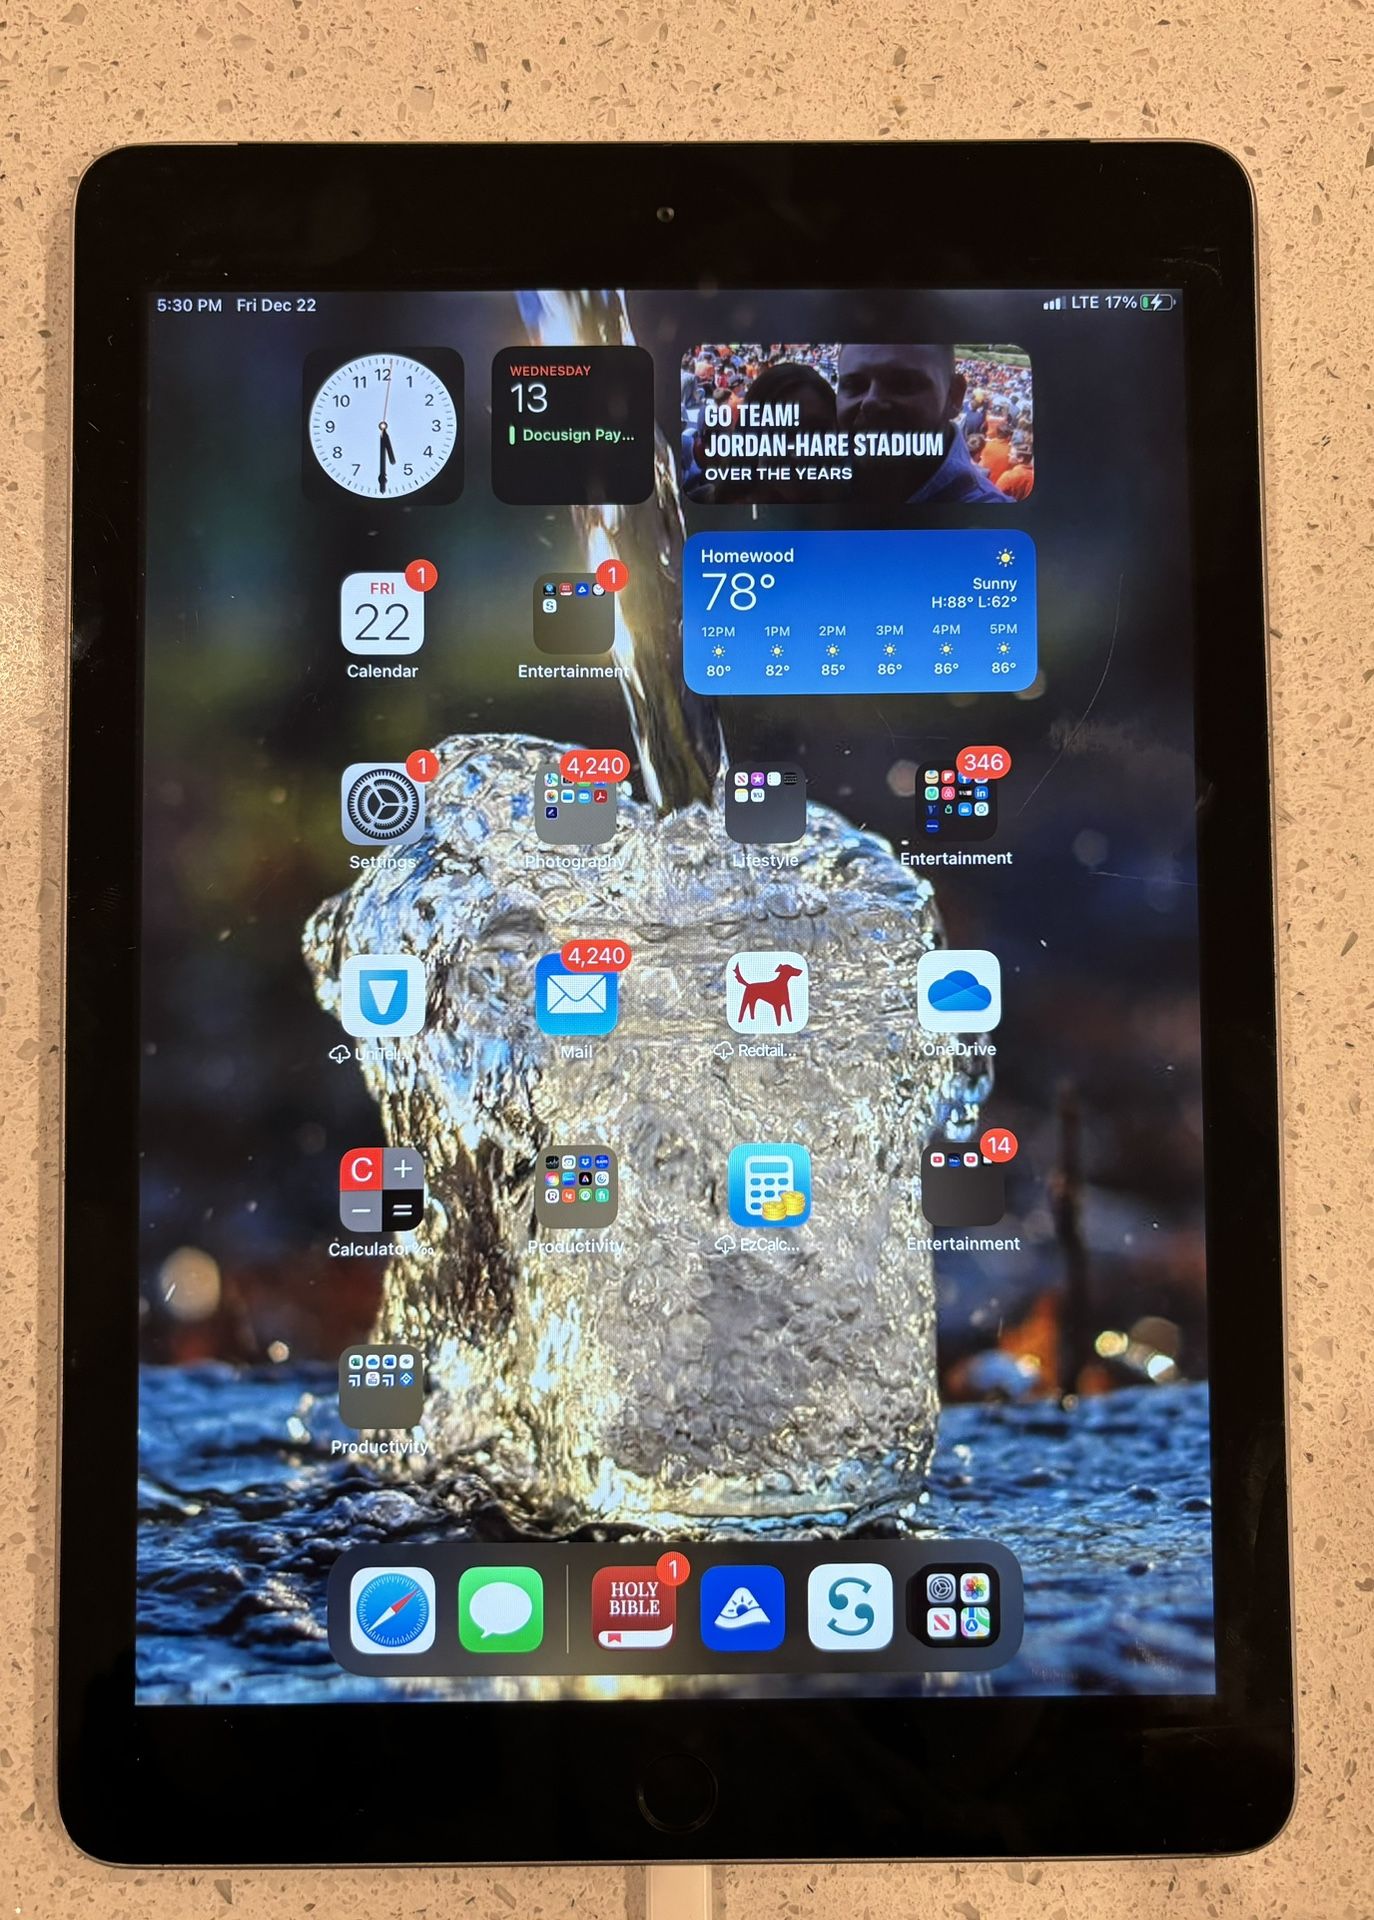 Apple iPad 2nd Generation iPadOS 15.6.1